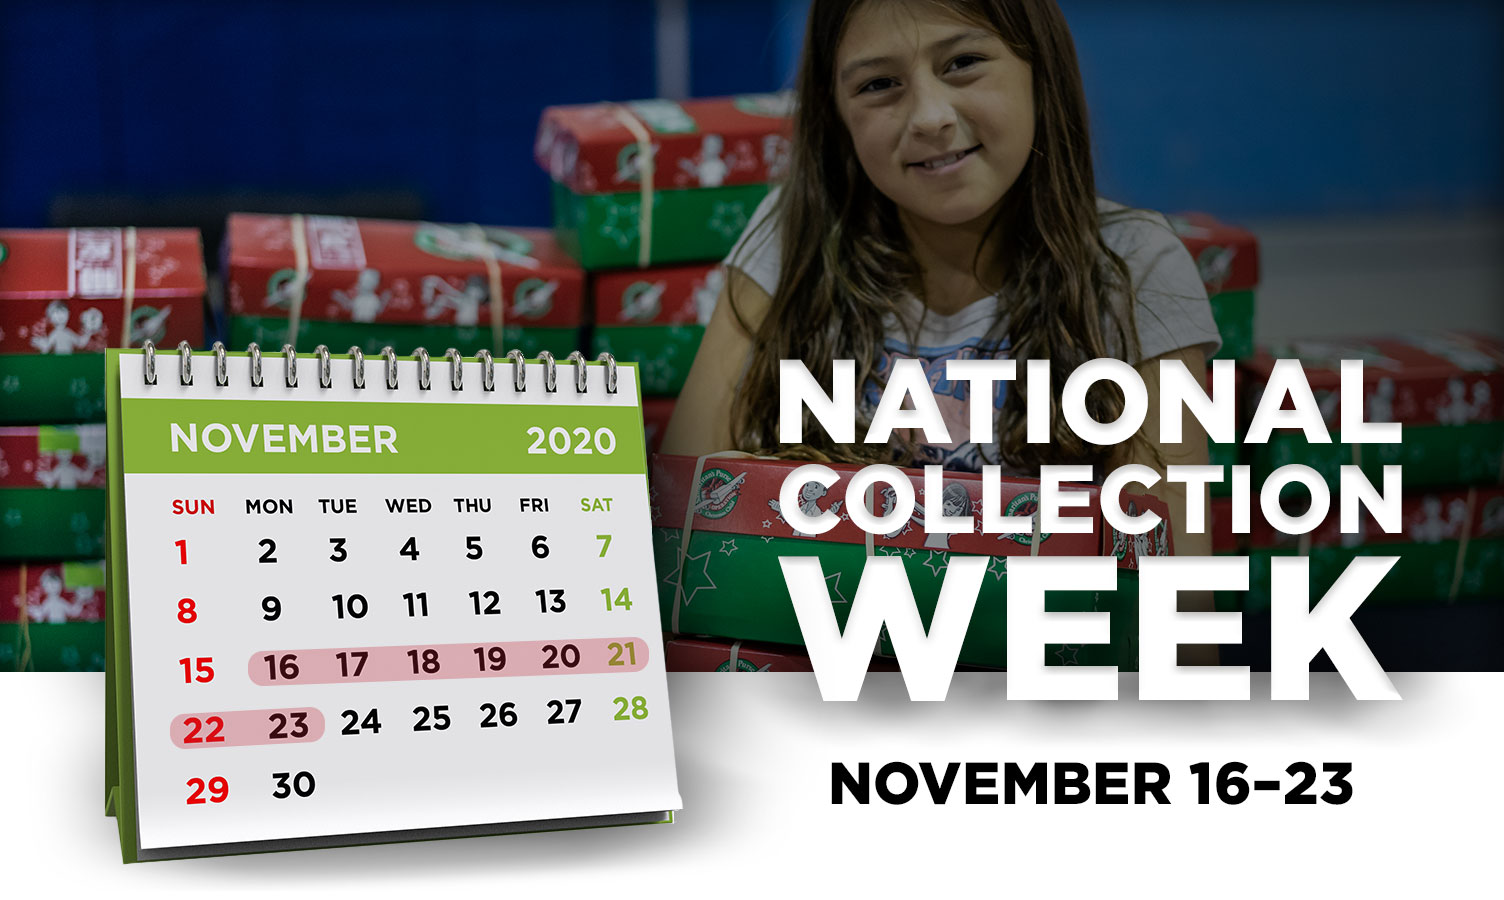 National Collection Week - November 16-23